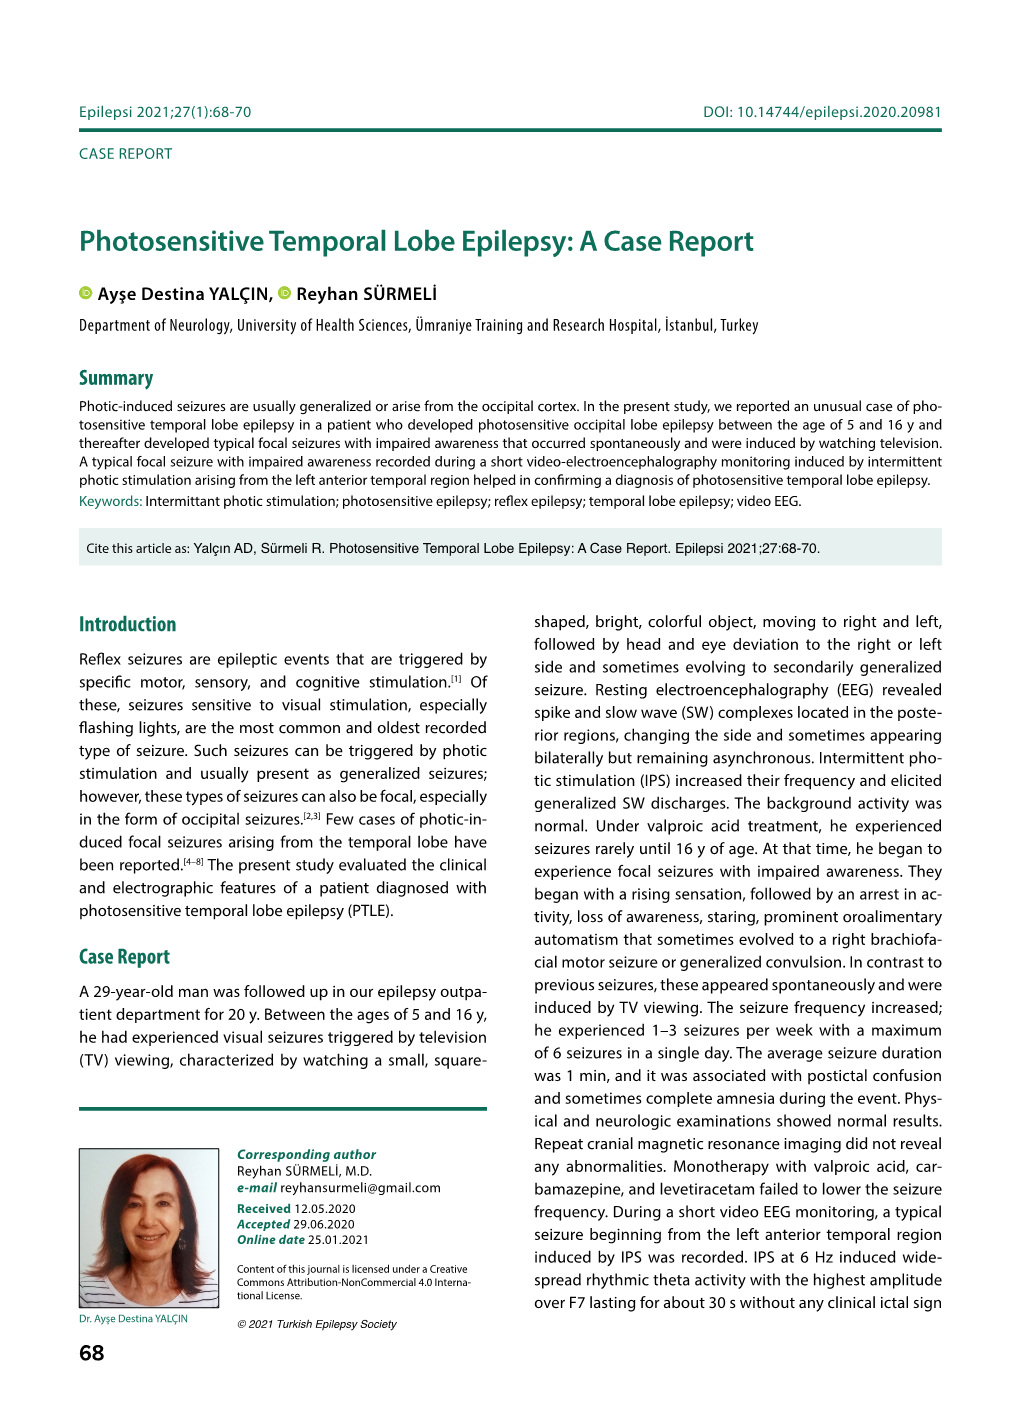 Photosensitive Temporal Lobe Epilepsy: a Case Report